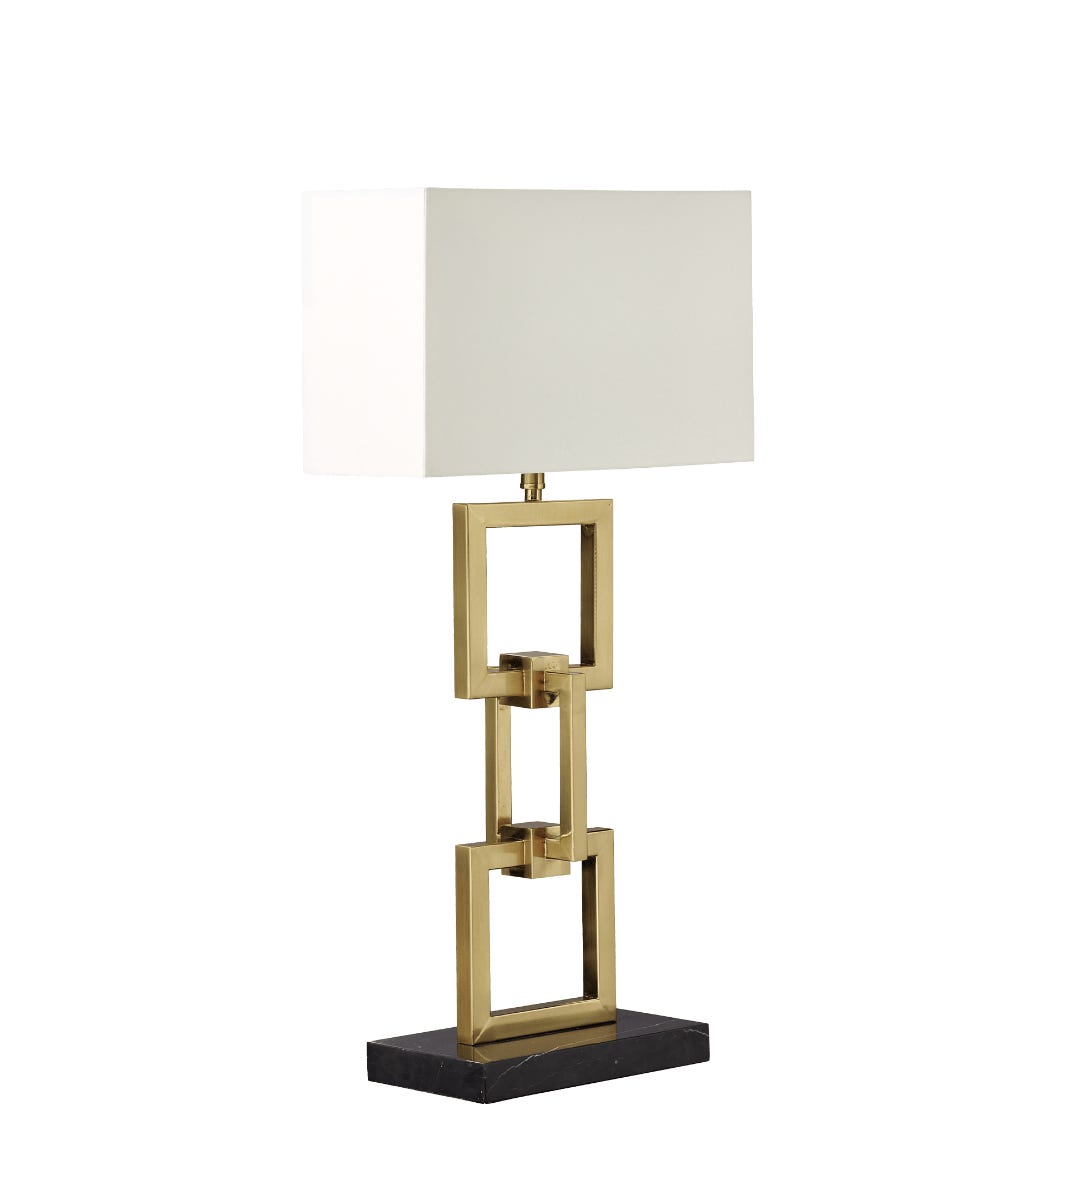 Morcent Iron Table Lamp Antique Brass, Modern Antique Brass Table Lamp Shades